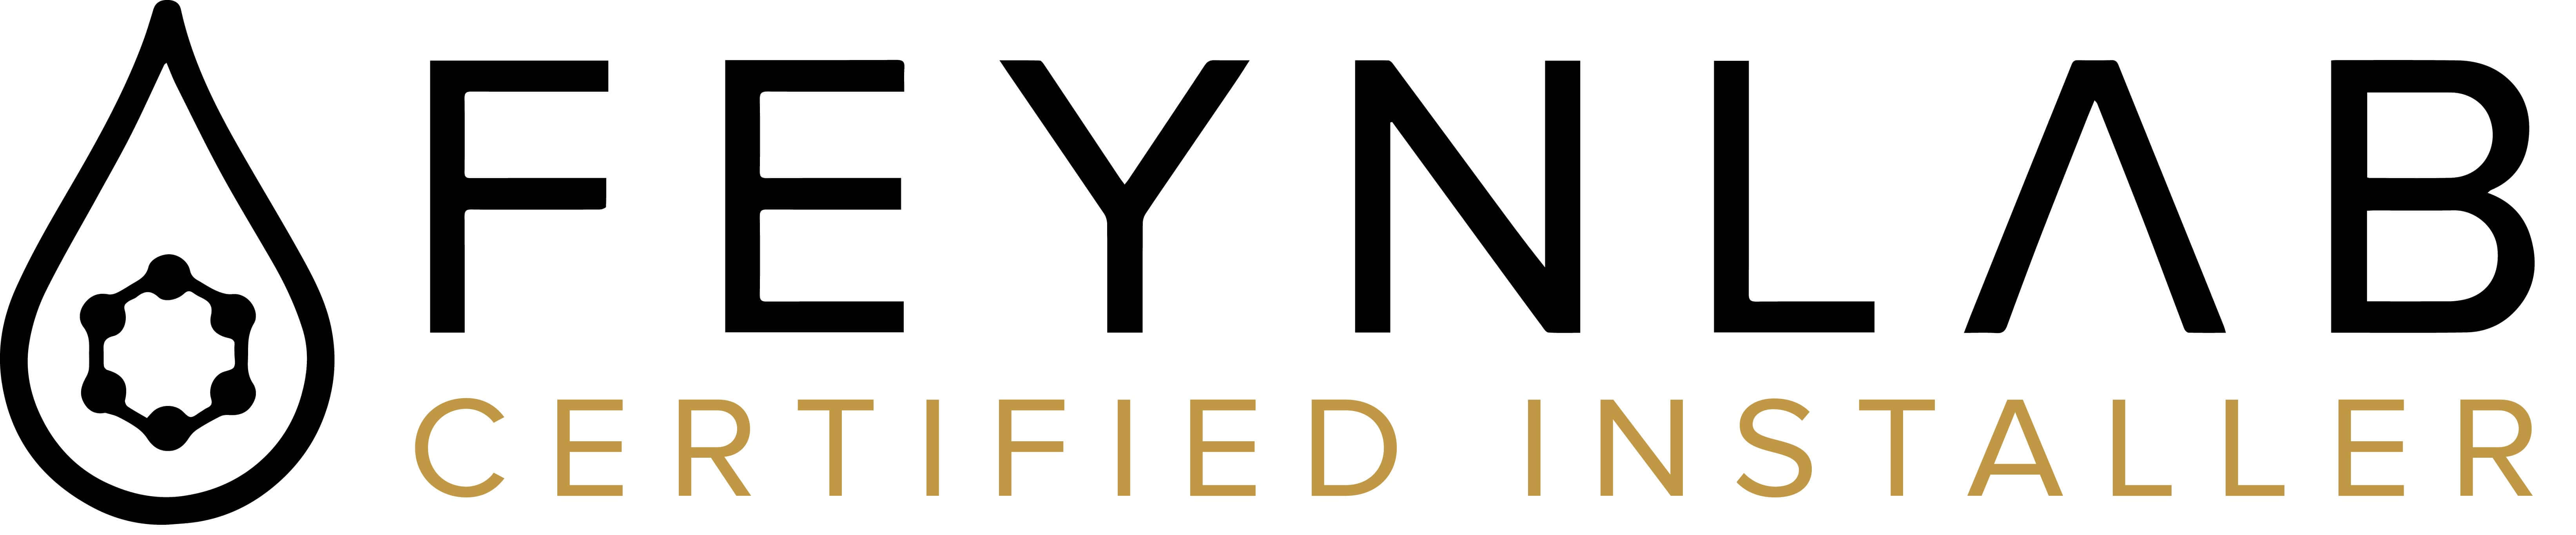 Certified Installer for Feynlab Ceramic Coatings Auckland